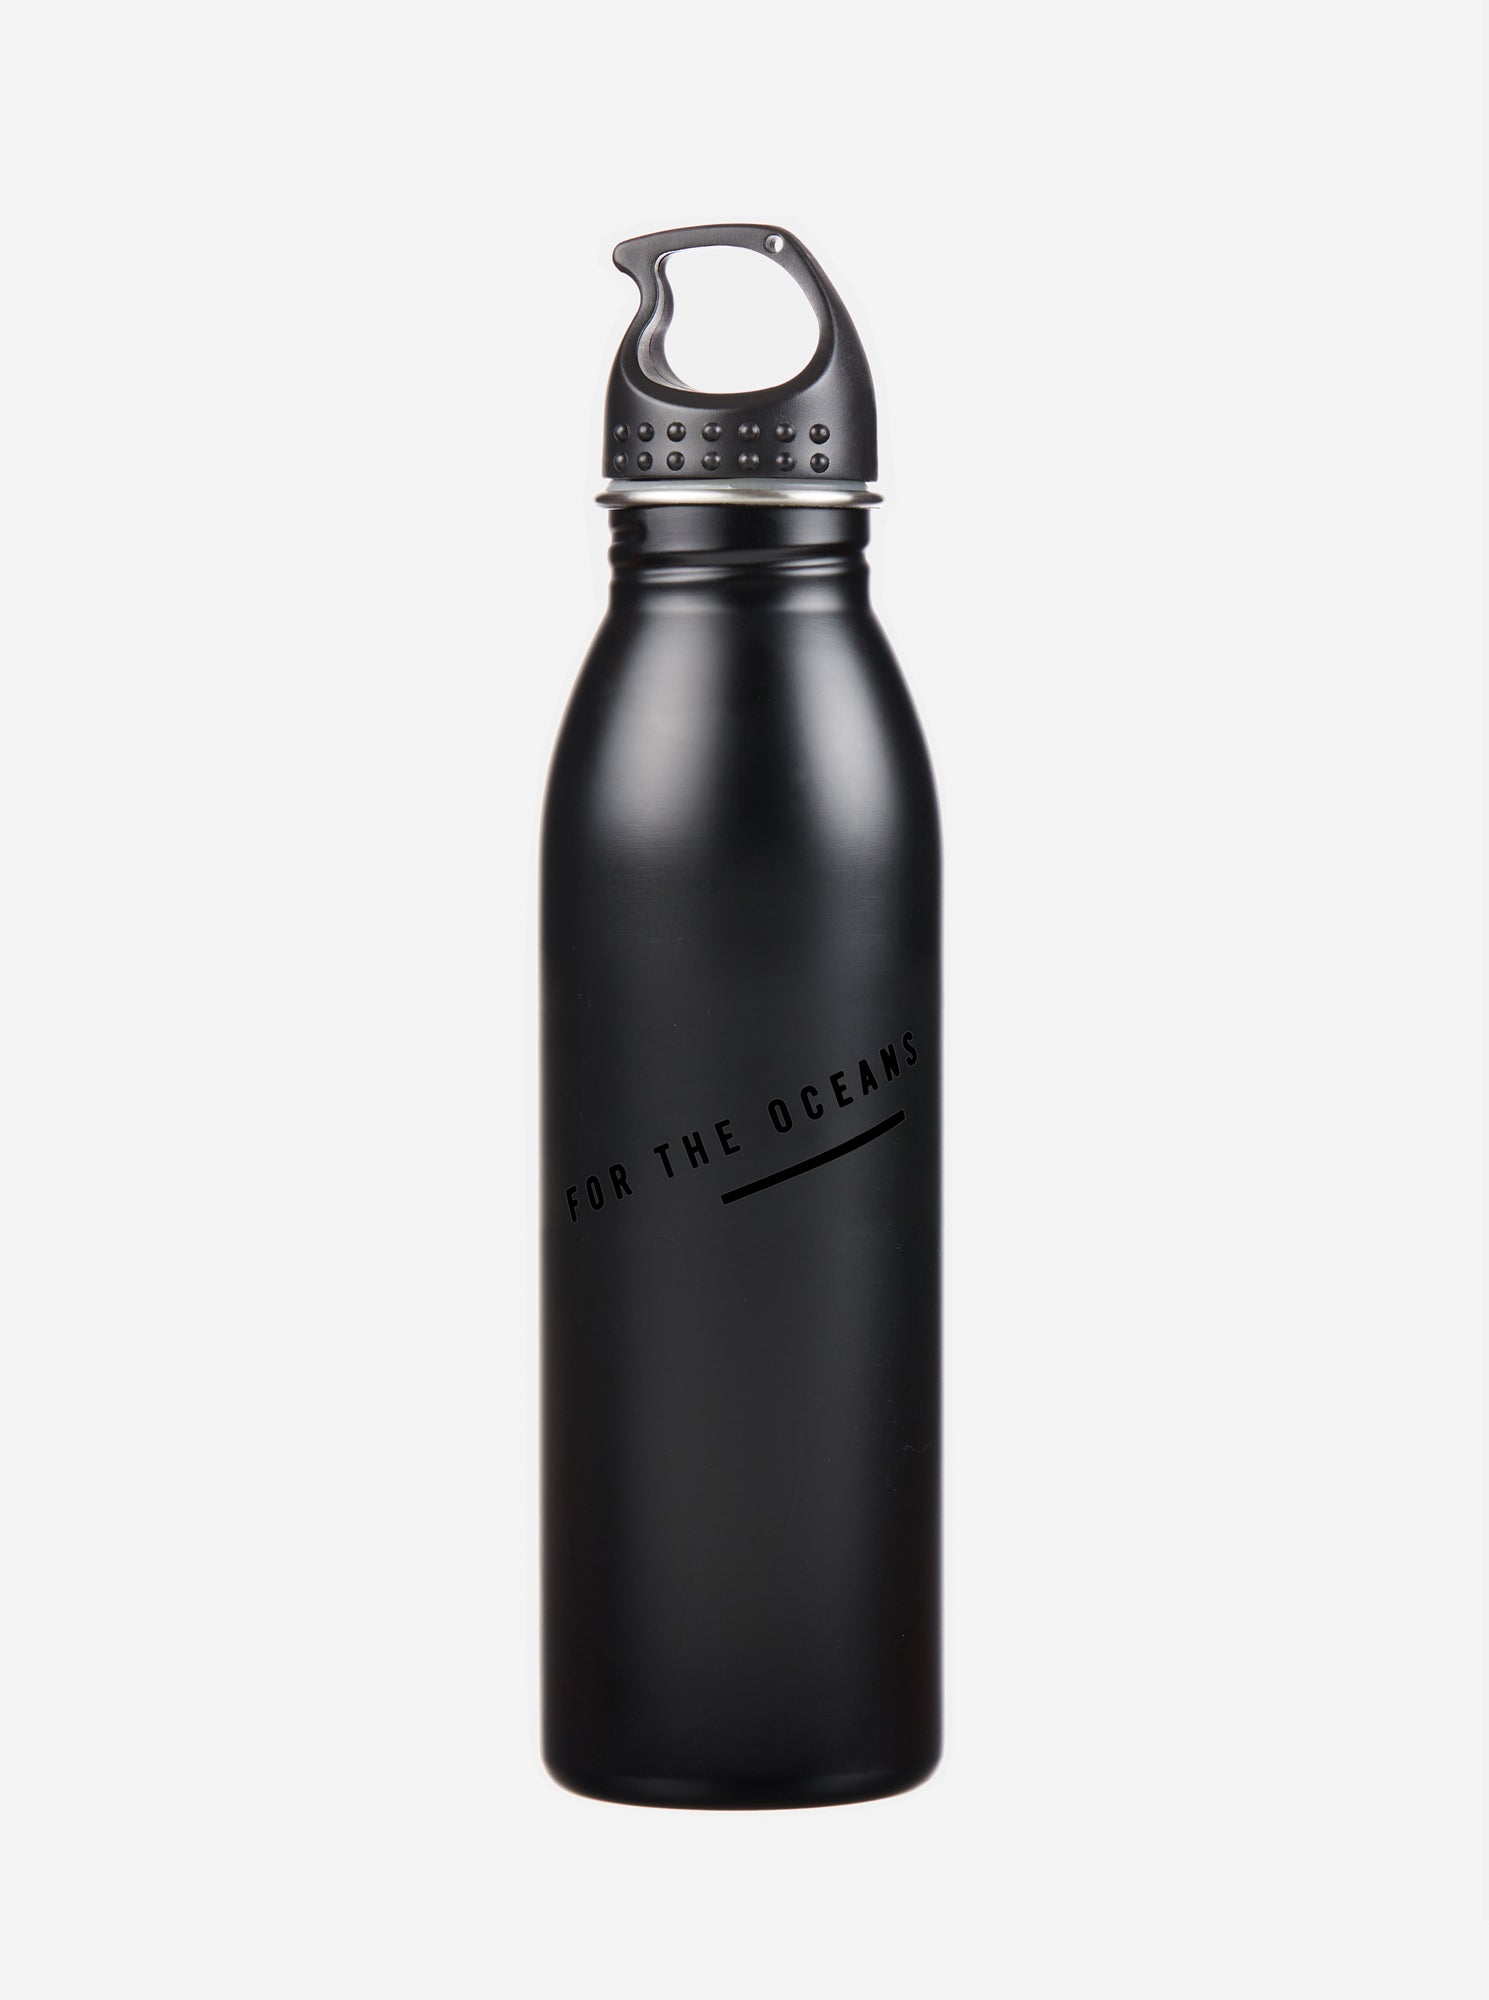 adidas water bottle black